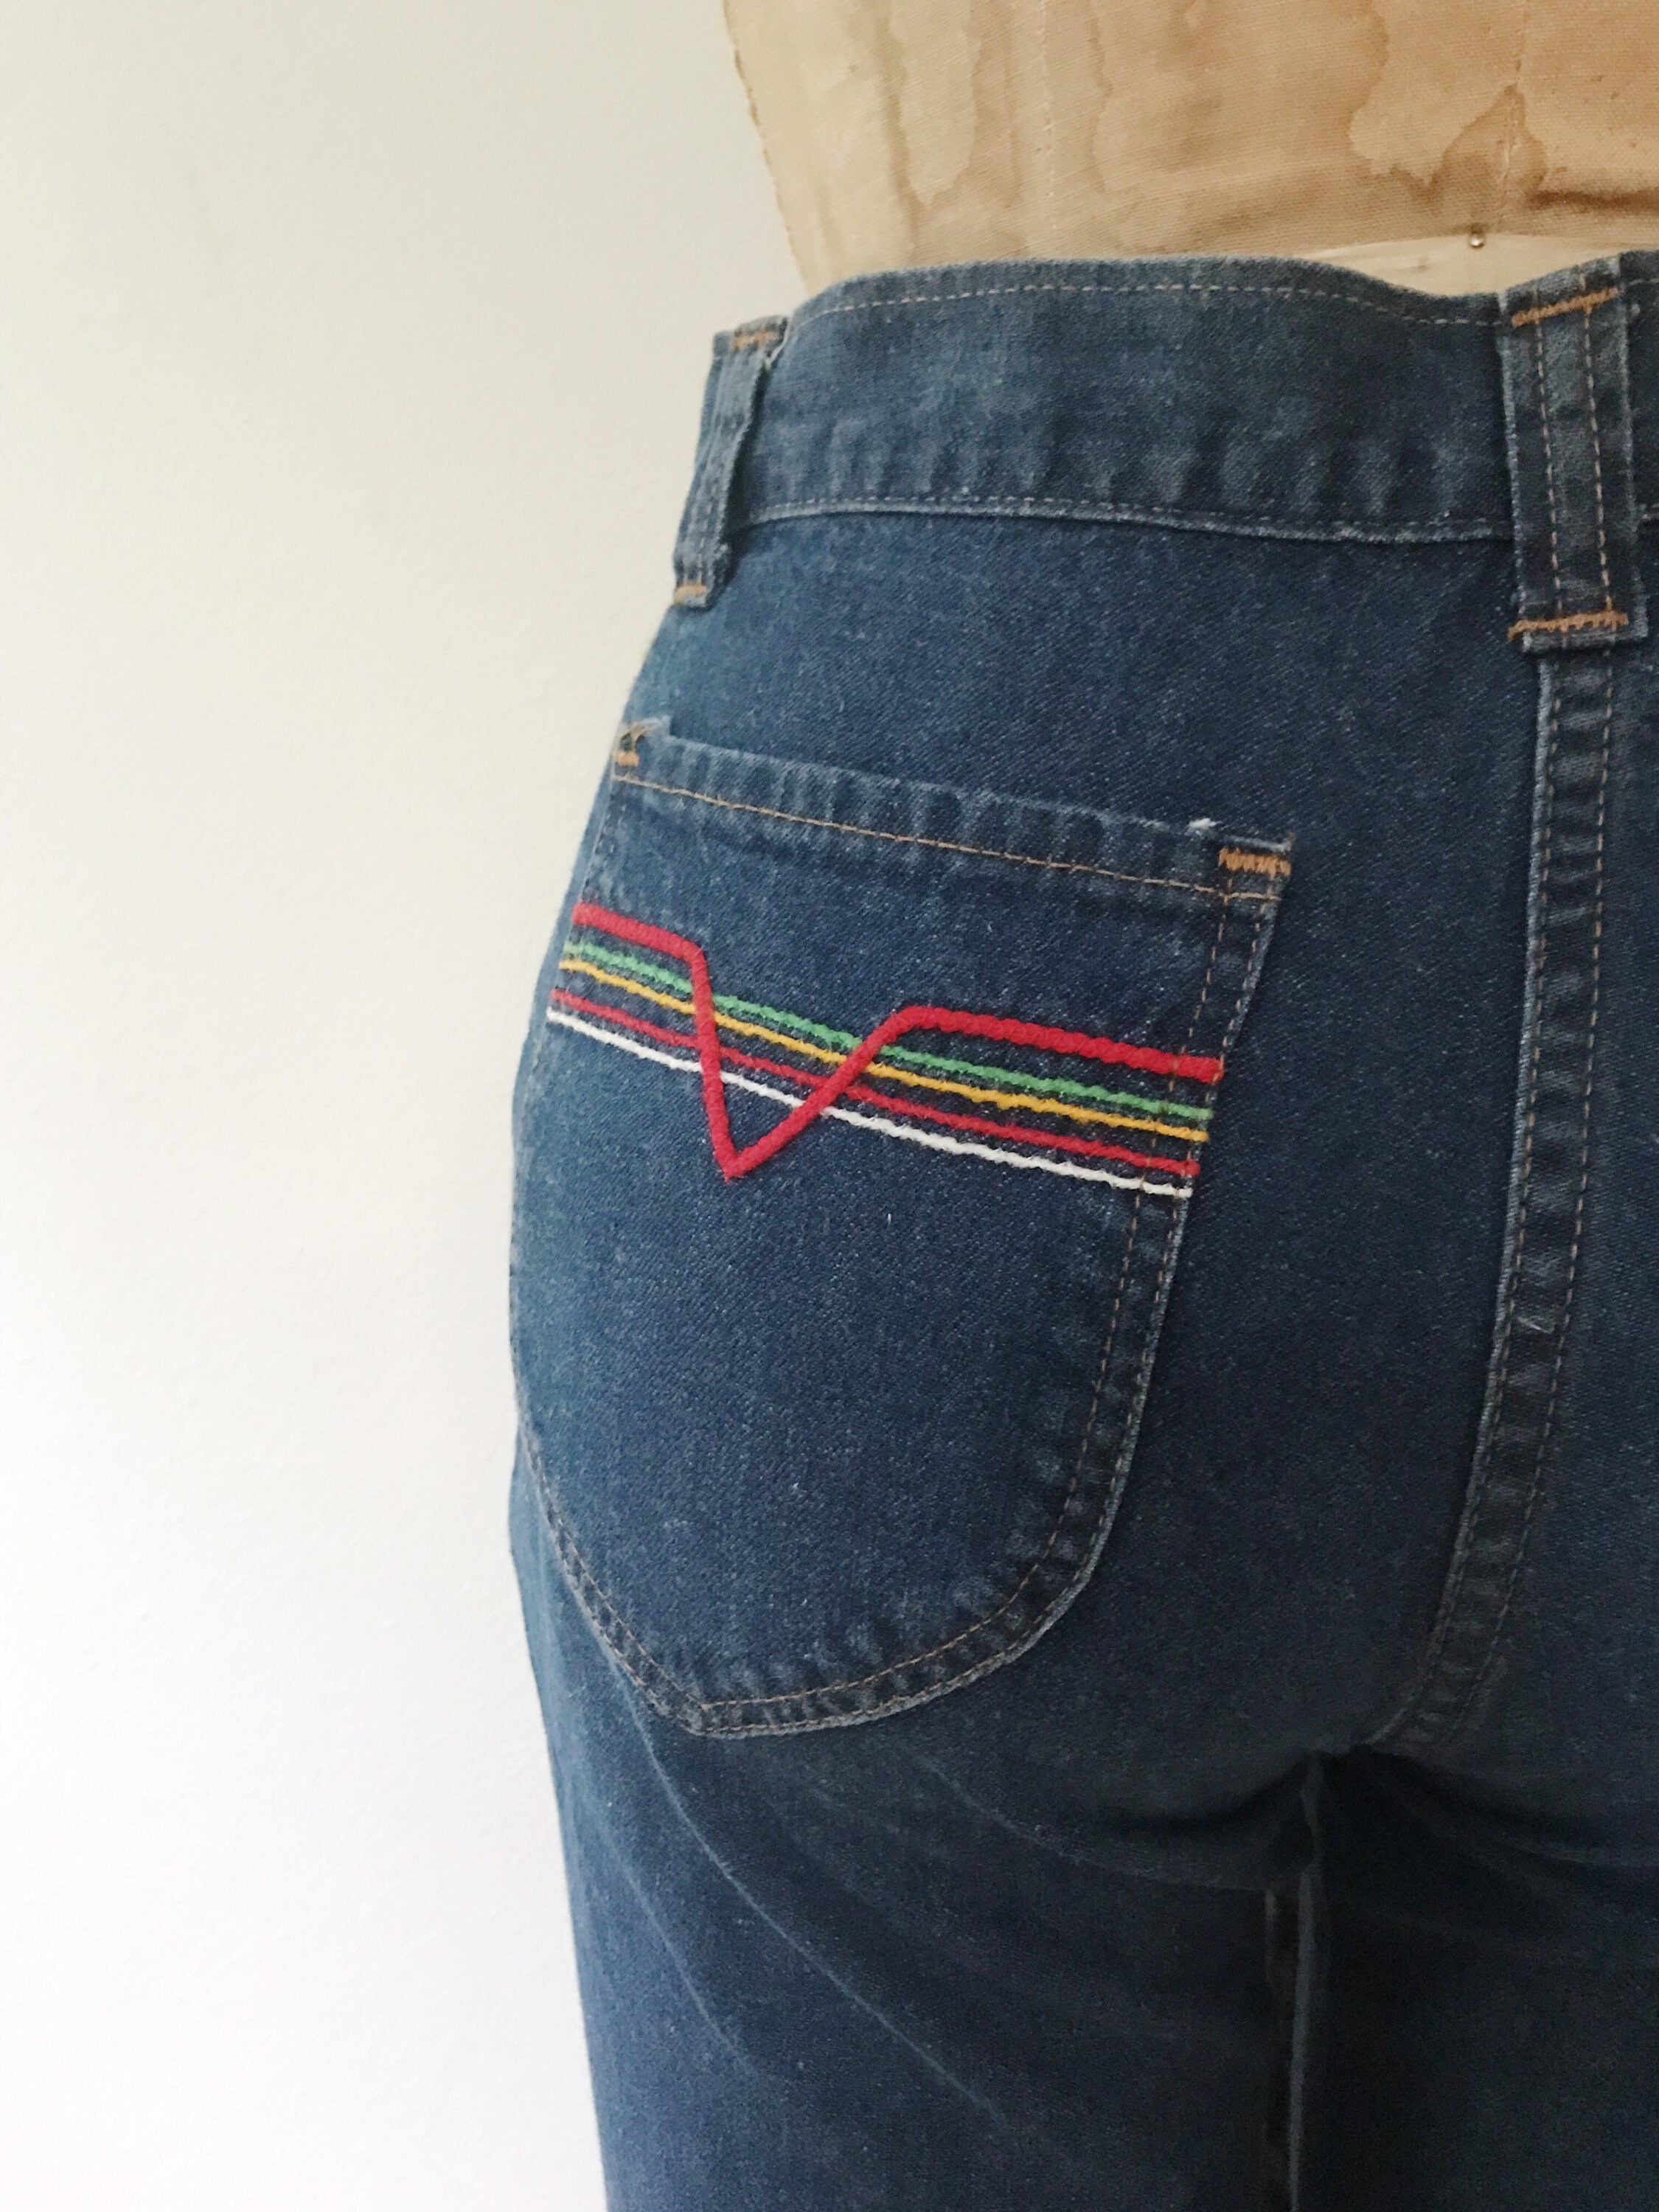 1970s jeans / vintage denim / 70s embroidery jeans